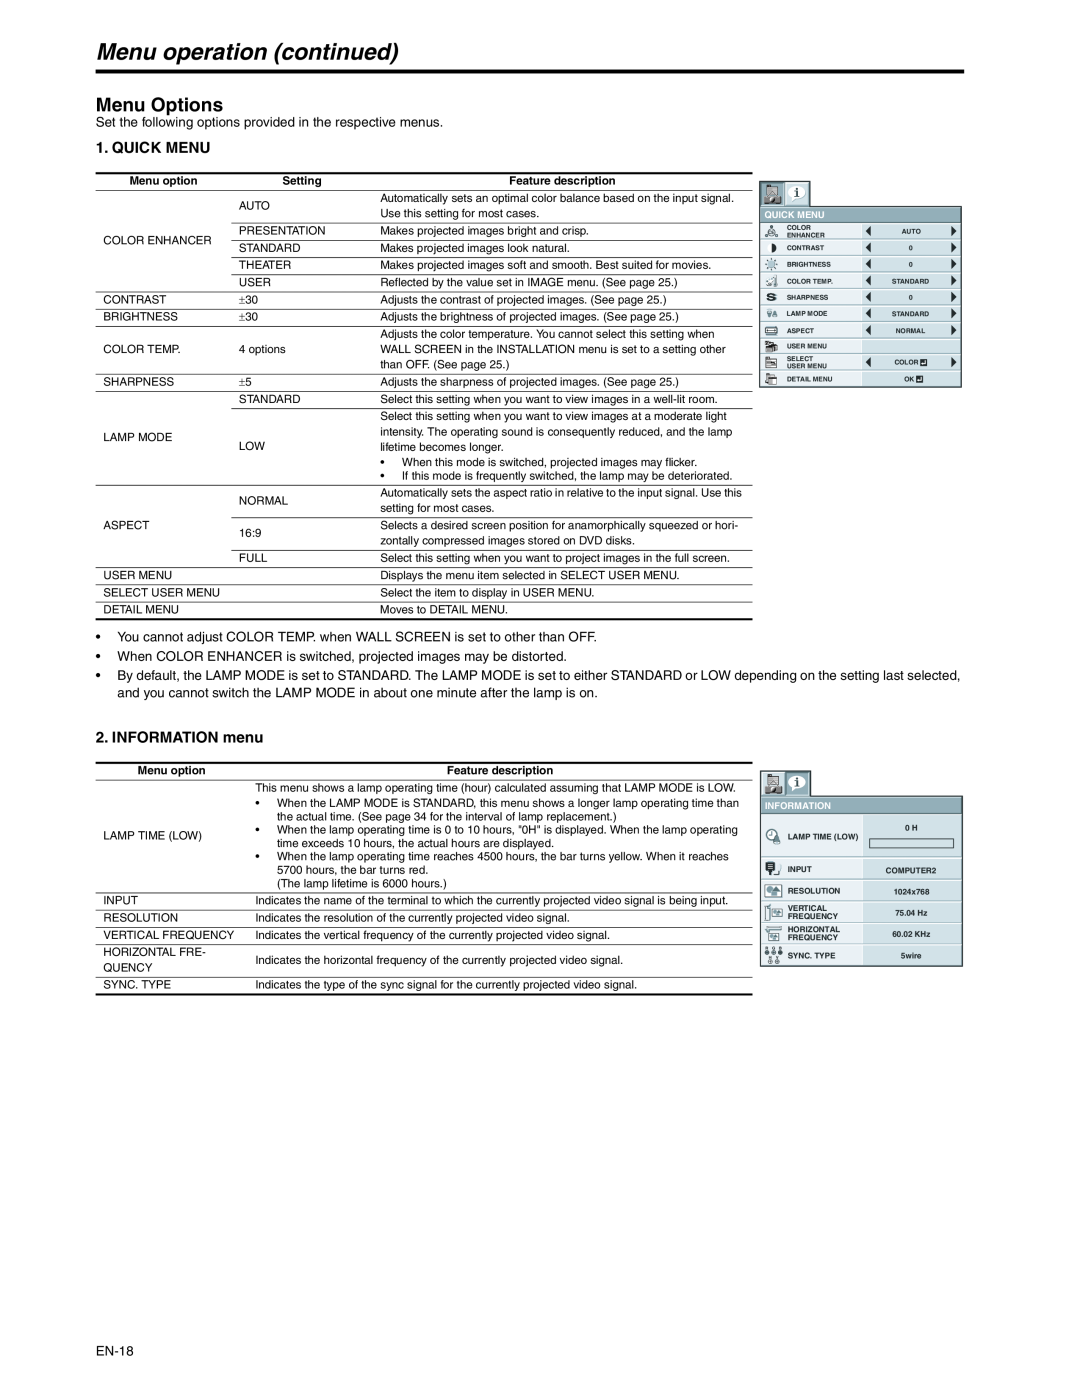 Mitsubishi Electronics XD250U-ST user manual Menu operation continued, Menu Options, Quick Menu, INFORMATION menu 